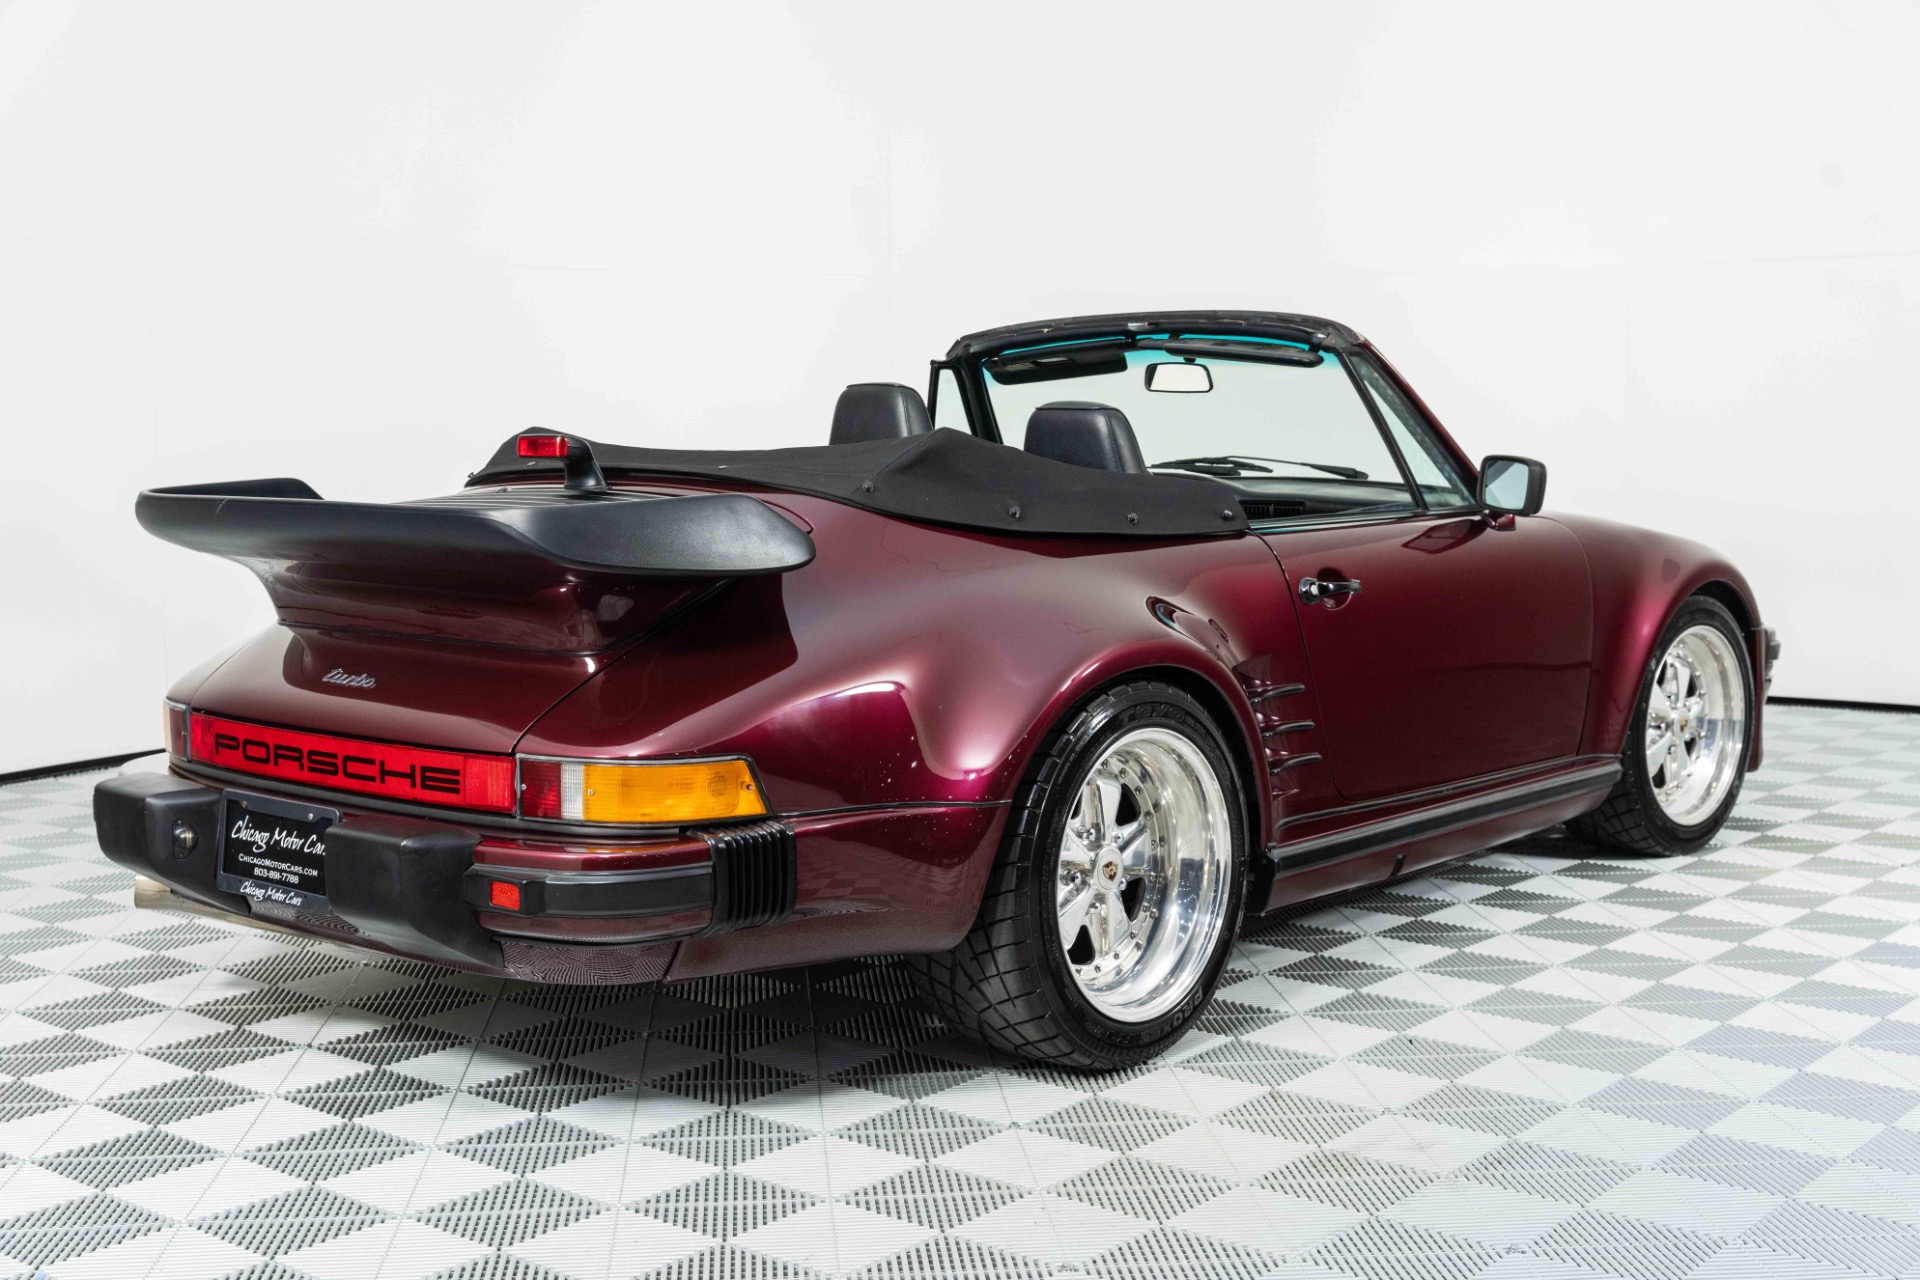 Used-1985-Porsche-930-Turbo-Cabriolet-RARE-Slant-Nose-Conversion-K27-Turbo-Super-Tasteful-Highly-Desired